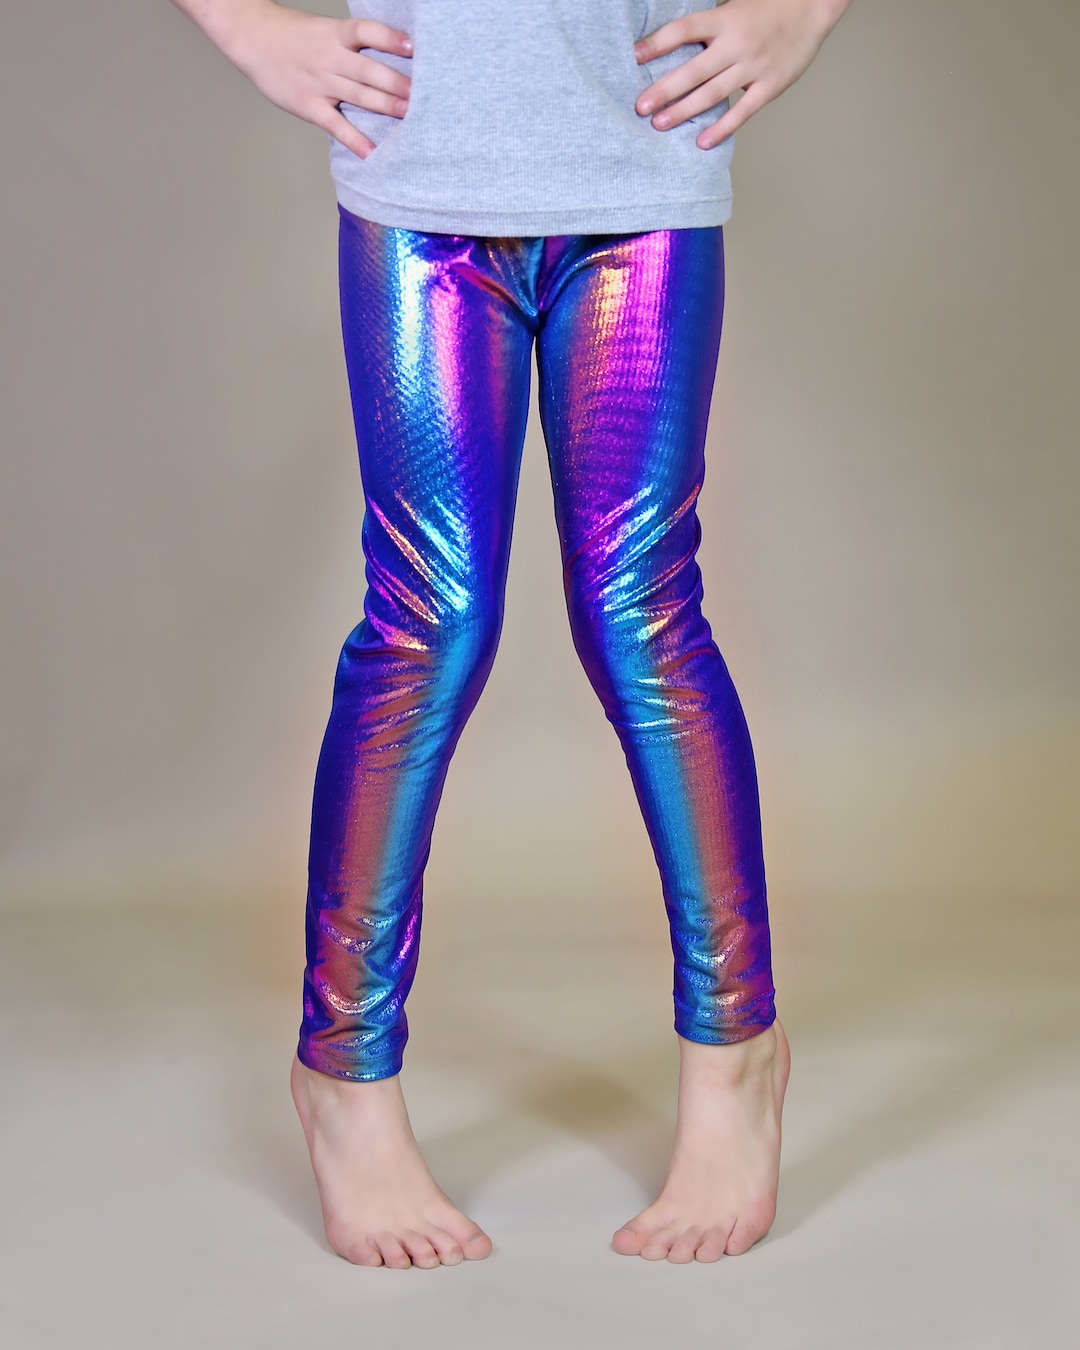 Blurred Rainbow Metallic Leggings rainbow Leggings, Metallic Rainbow Pants, Metallic  Leggings, Dance Pants, Birthday Outfit, Gift, Purple -  Canada